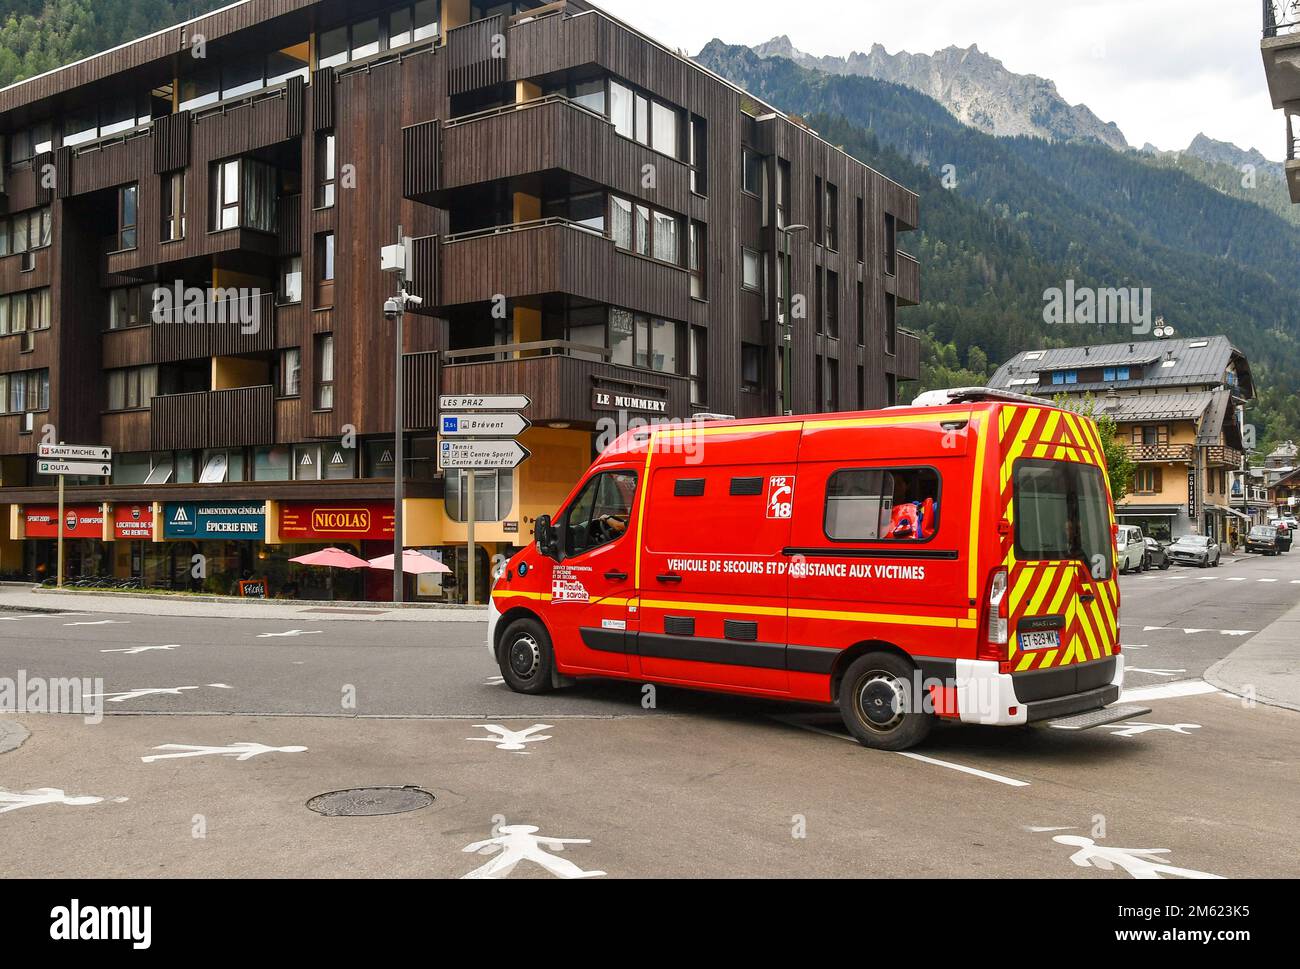 Ambulance van of the fire brigade in the city centre, Chamonix, Haute Savoie, France Stock Photo